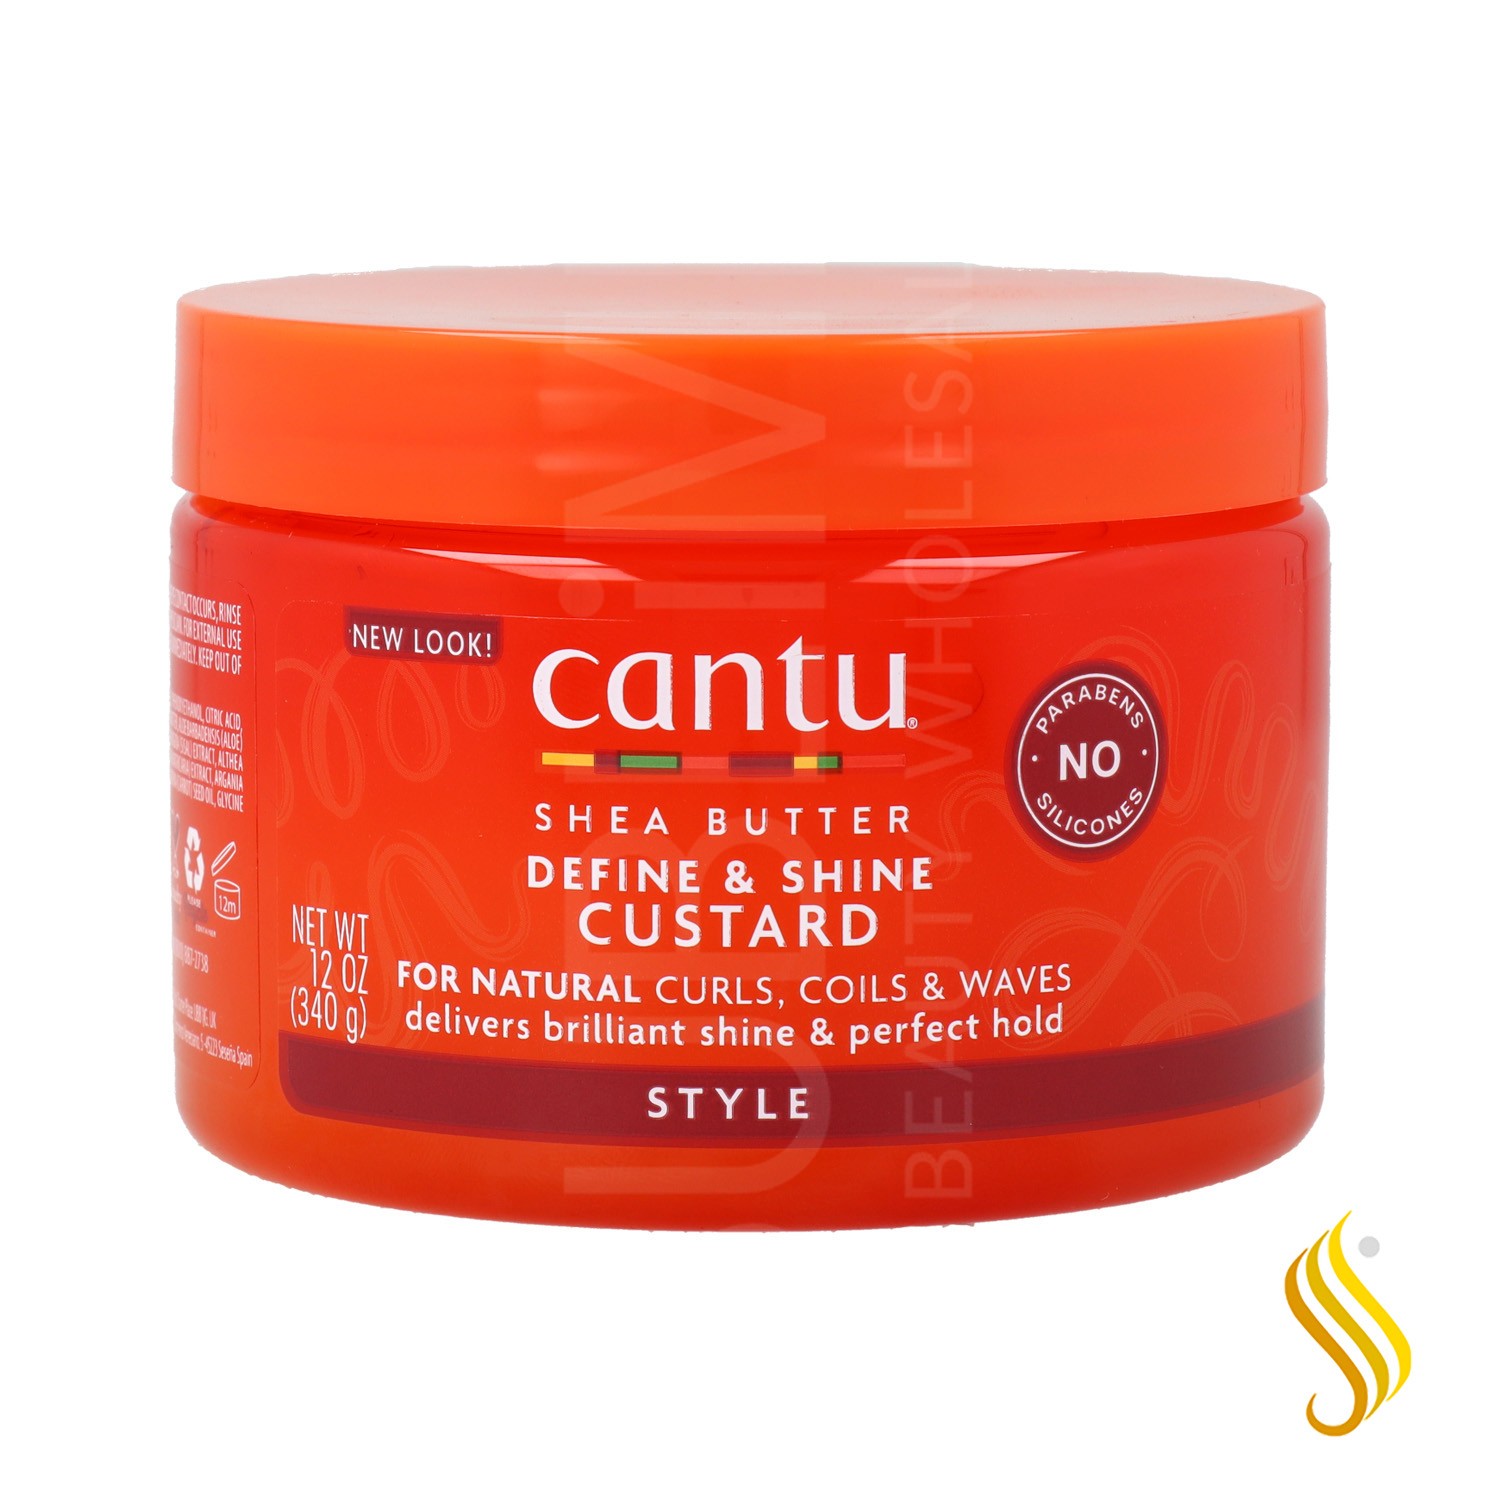 Cantu Shea Butter Natural Hair Define & Shine Custard 340g / 12oz